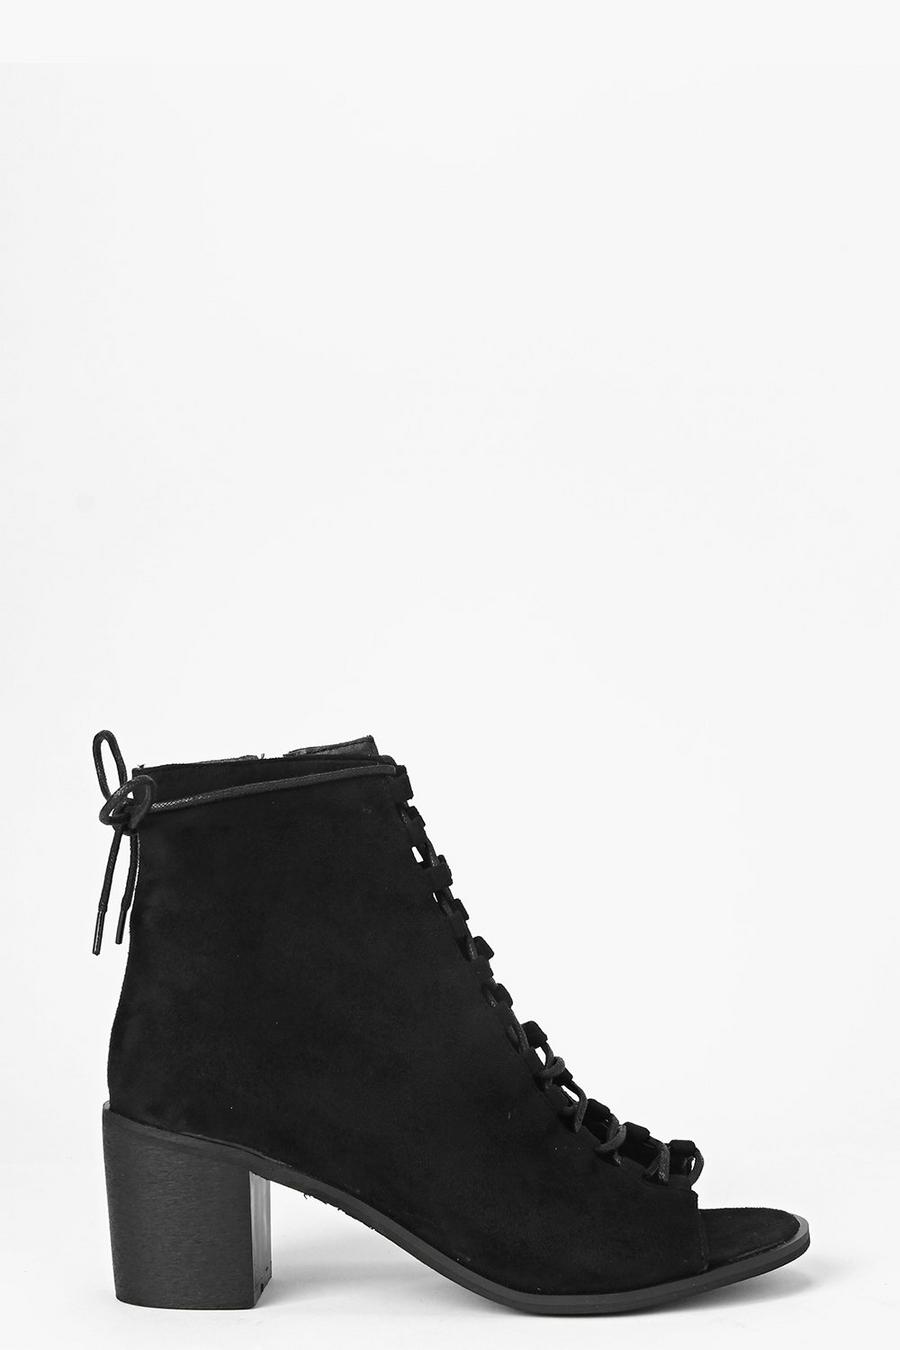 Black Peeptoe Lace Up Shoe Boots image number 1